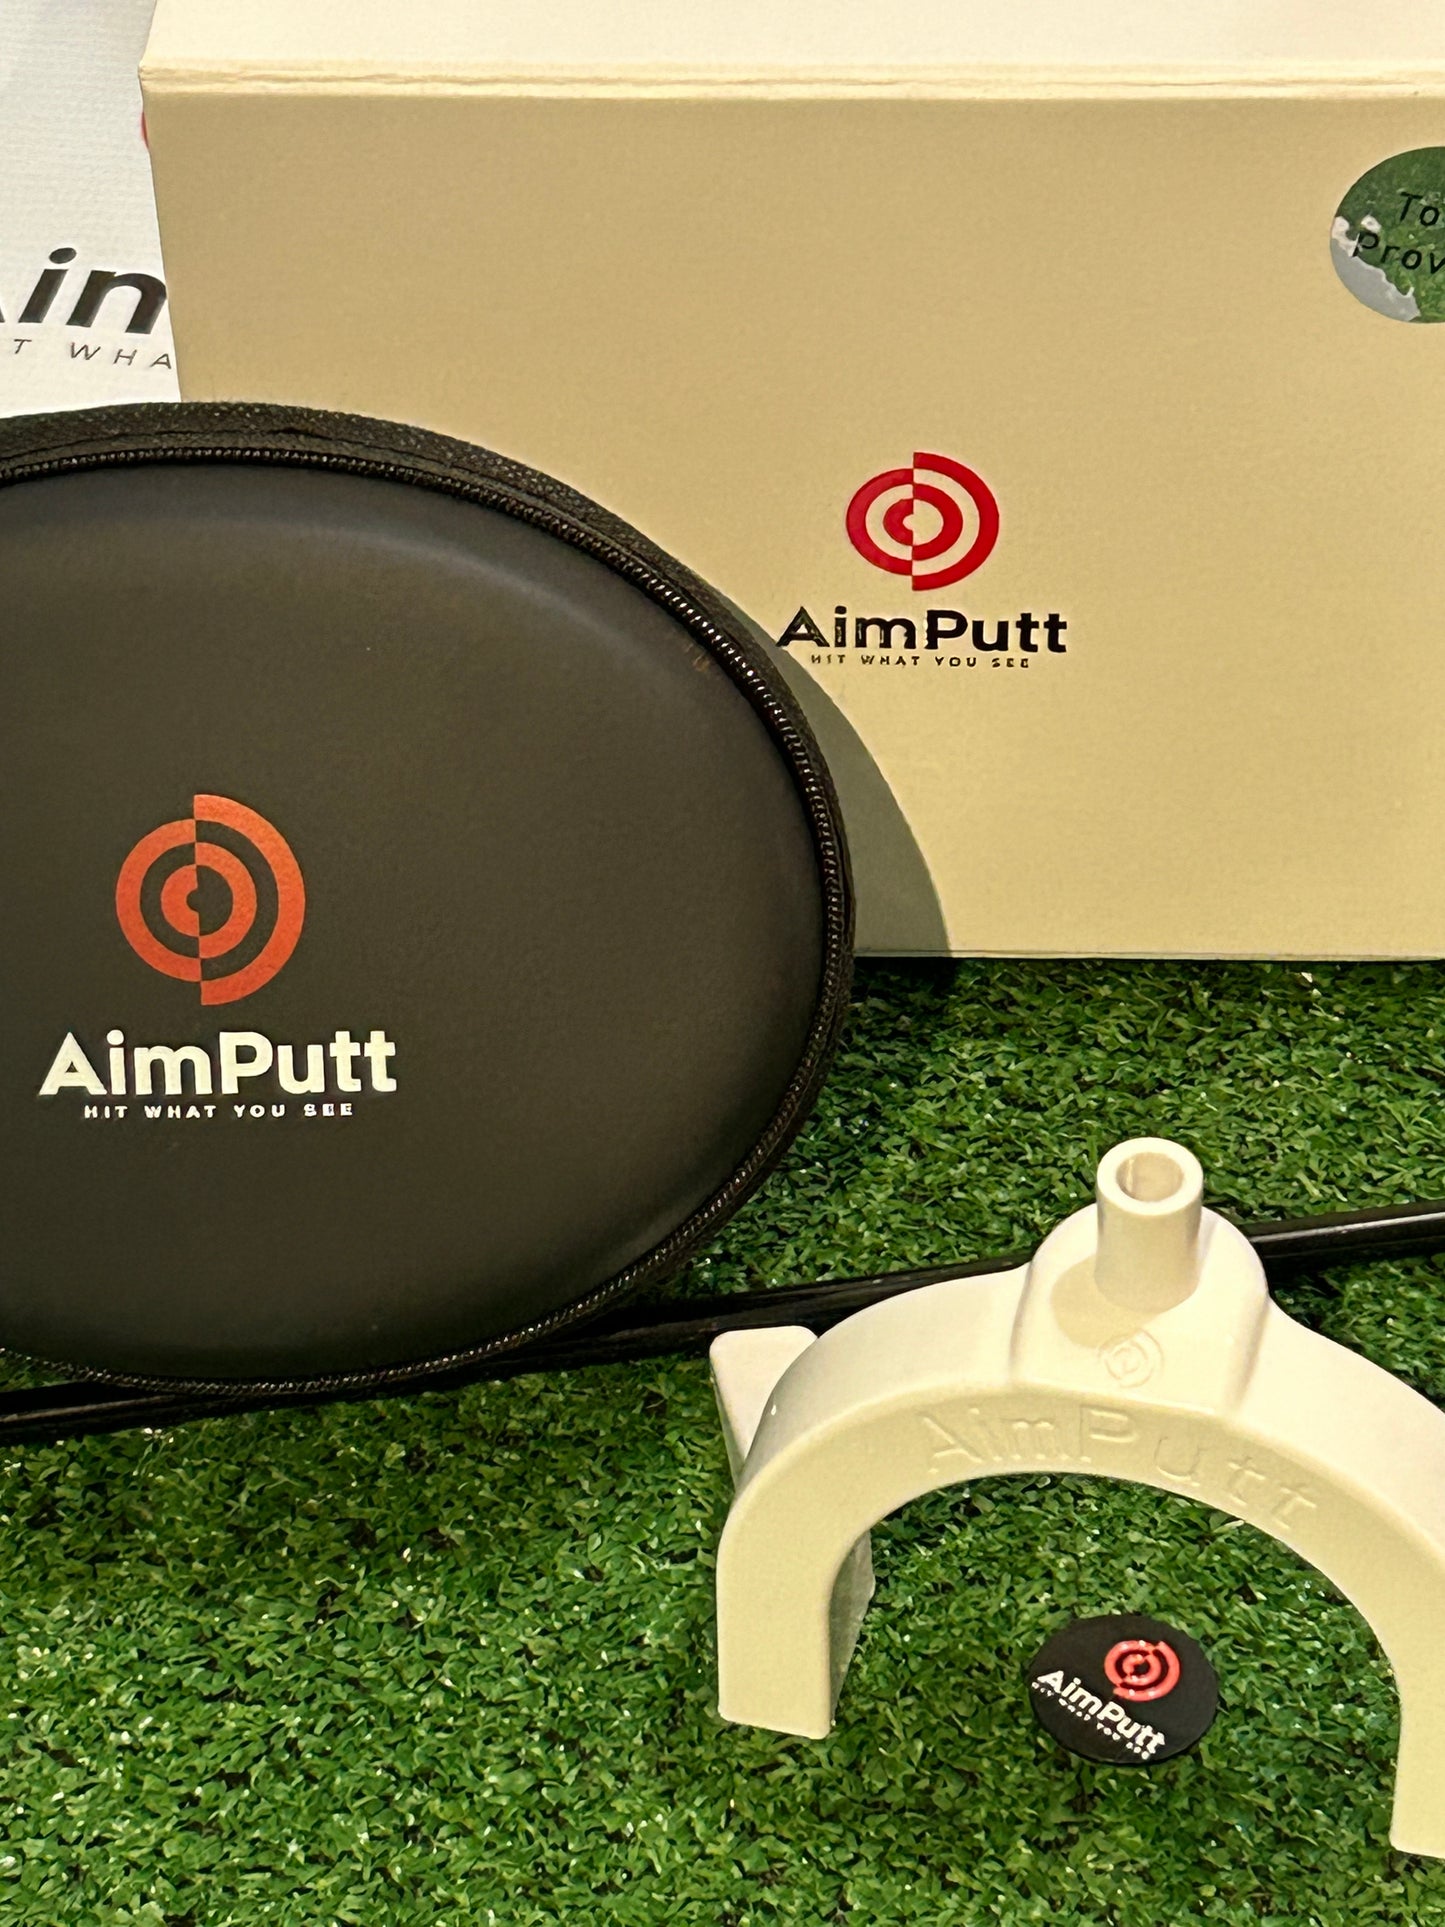 AimPutt Training Device